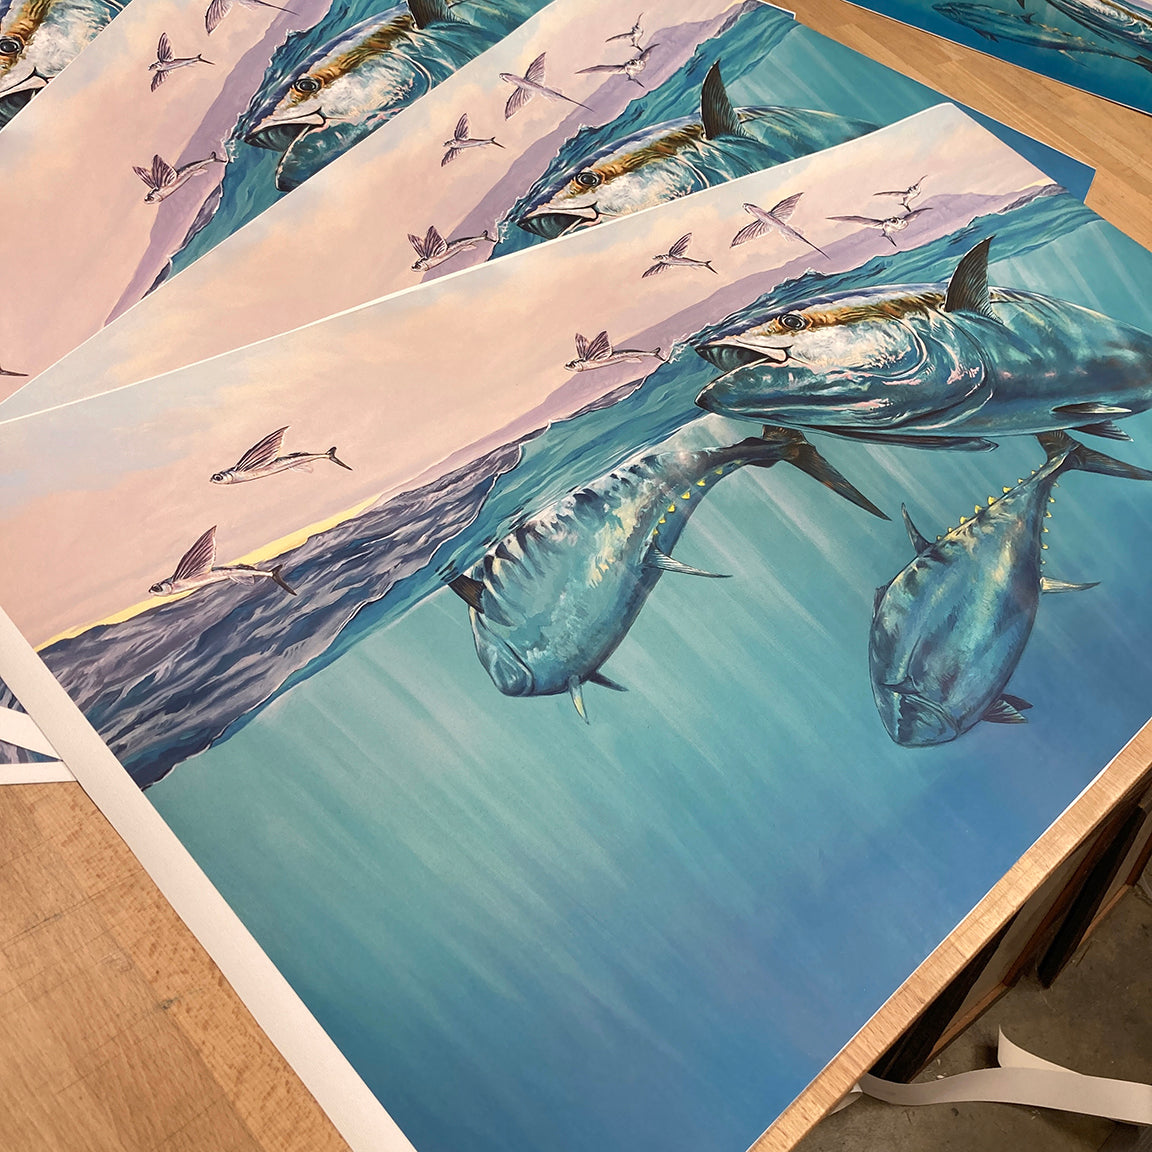 Sale on Limited Edition Socal Coastal fishing art framed, prints